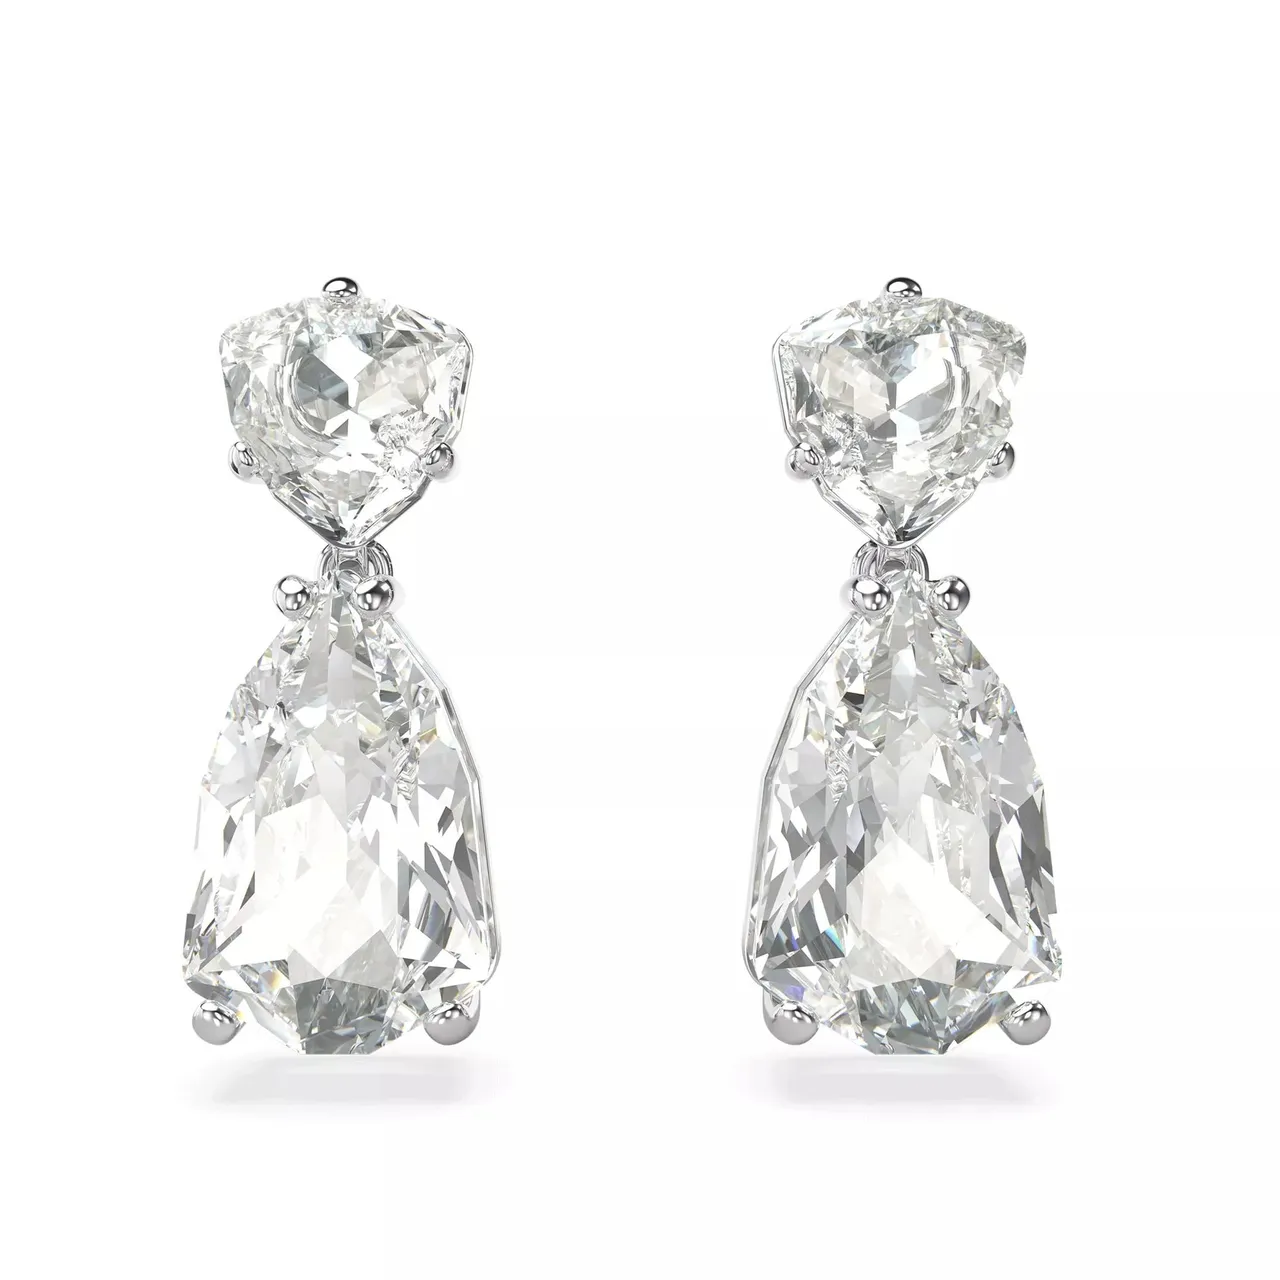 Swarovski Earrings - Mesmera drop earrings, Mixed cuts, Rhodium plated - white - Earrings for ladies